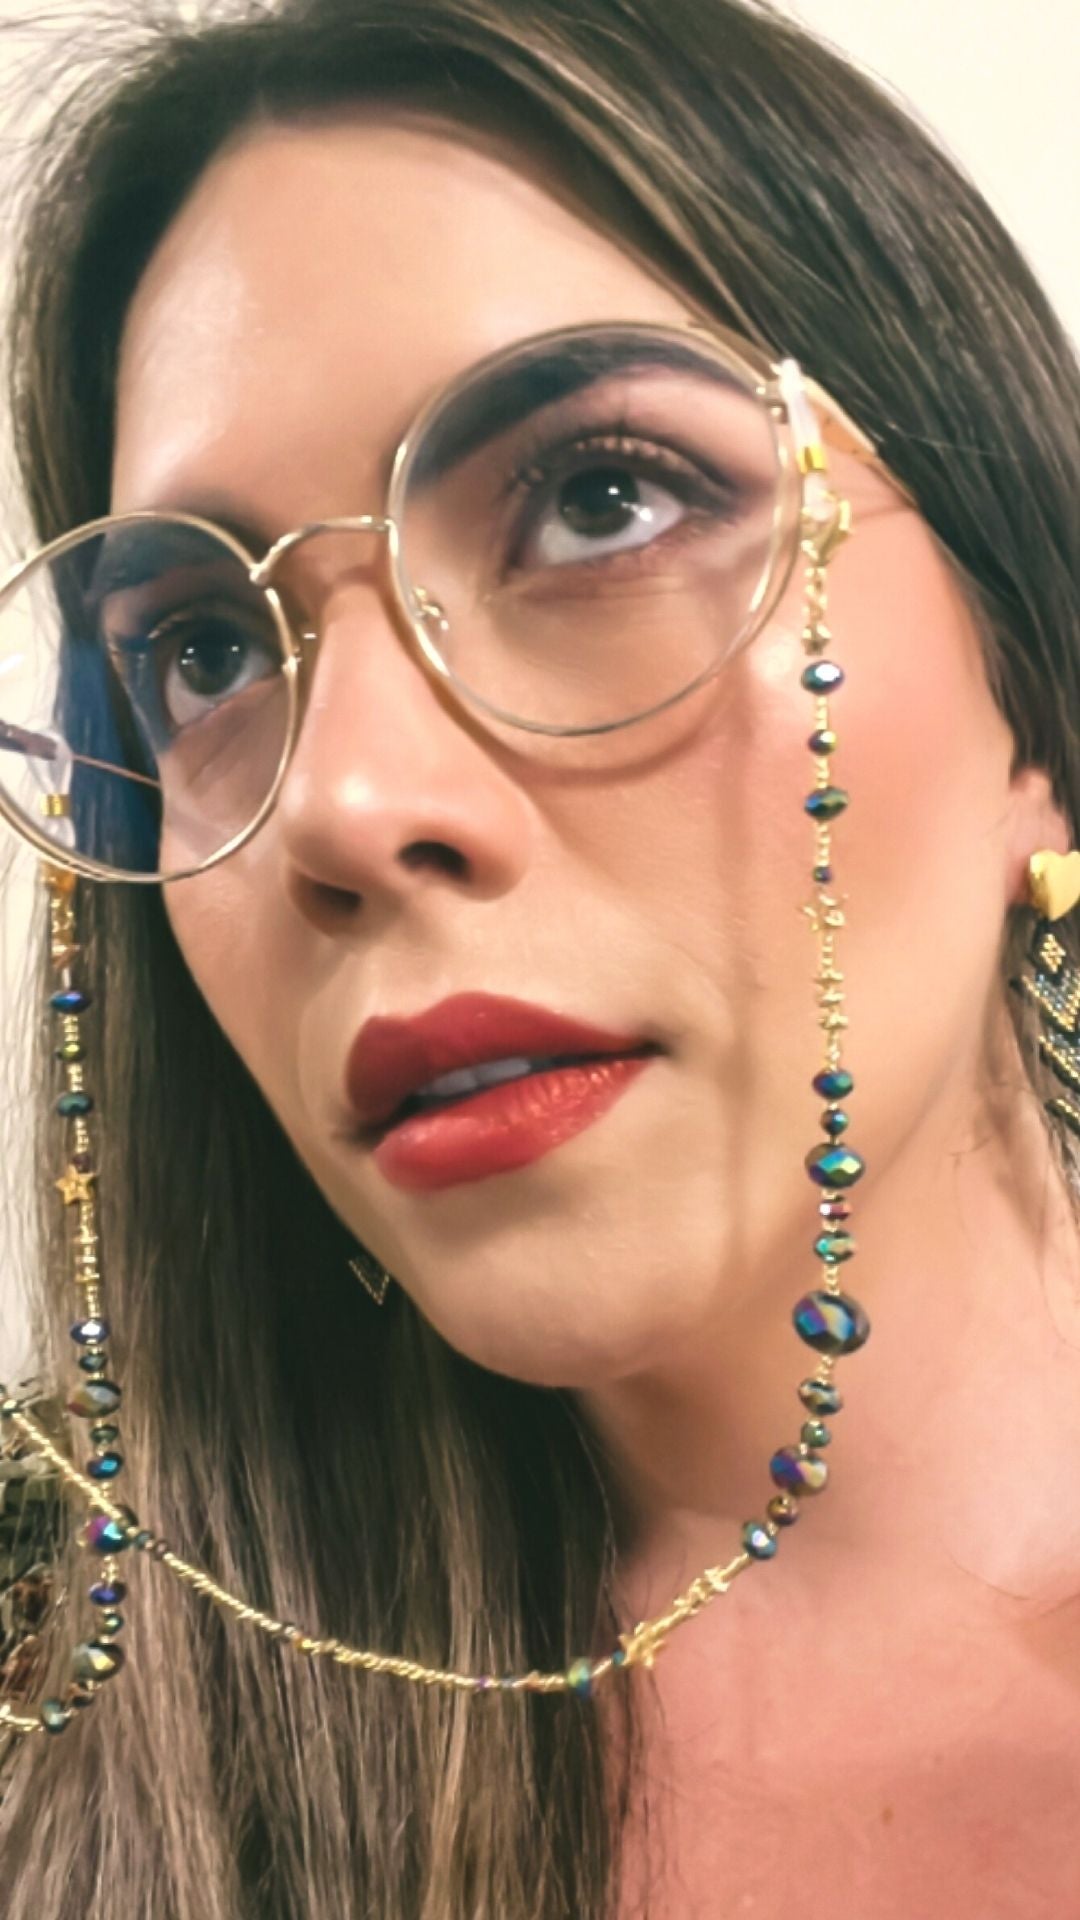 PRISM Eyeglass Chain